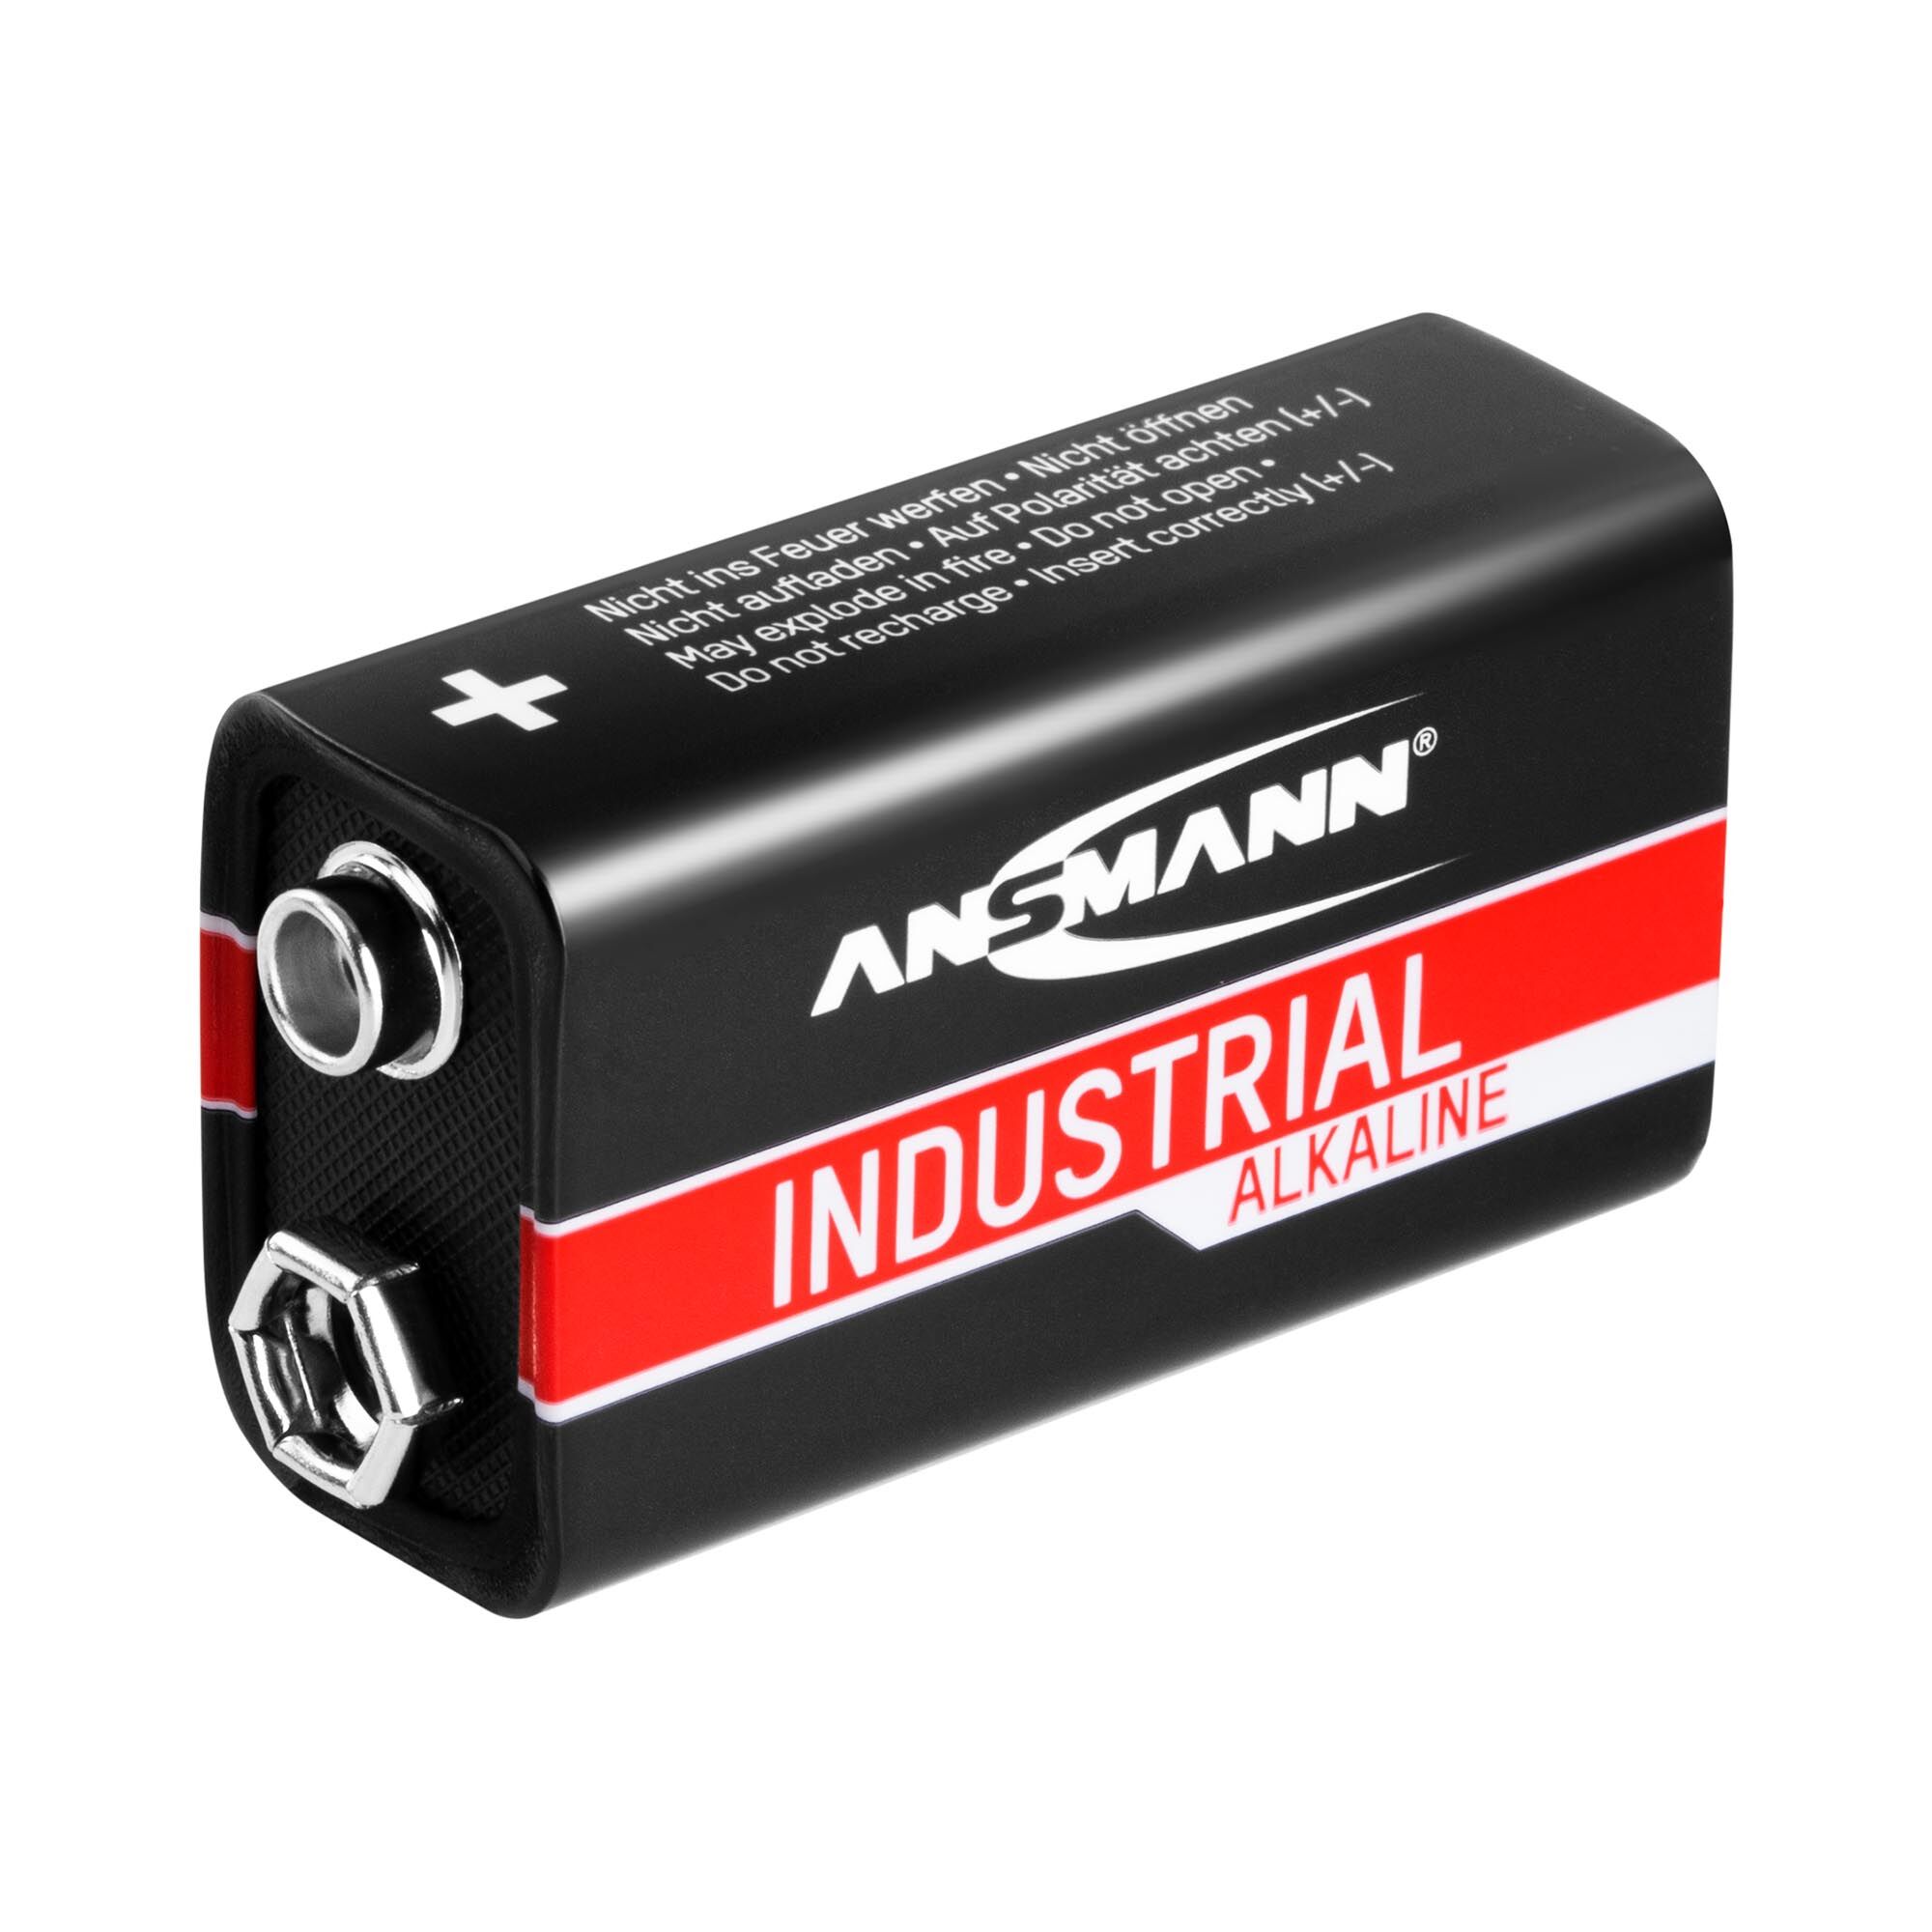 Ansmann INDUSTRIAL Alkaline Batteries -10 x 9 V batteries 6LR61 1505-0001